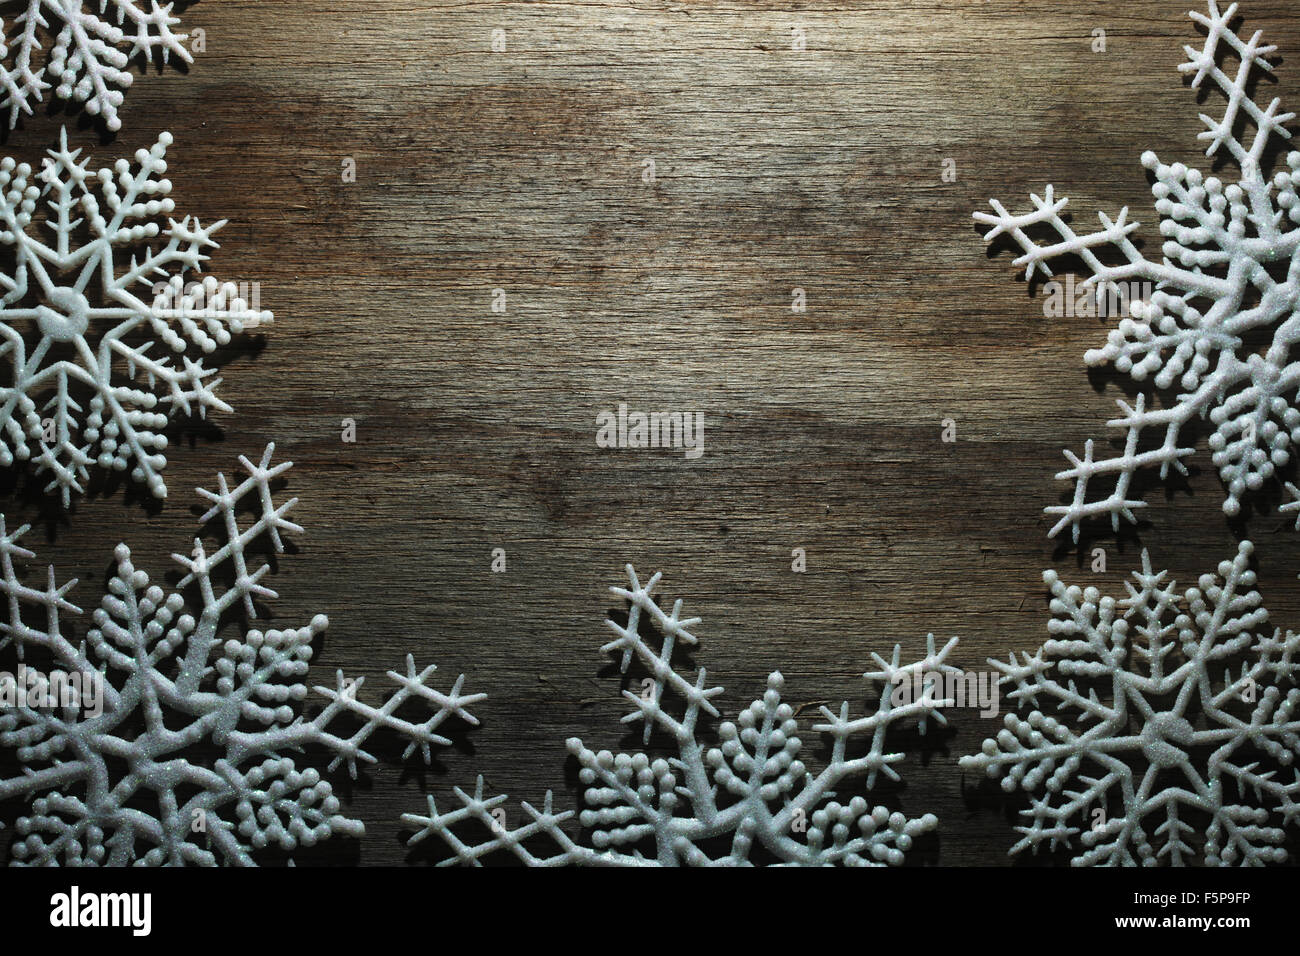 Snowflakes on wooden background Stock Photo